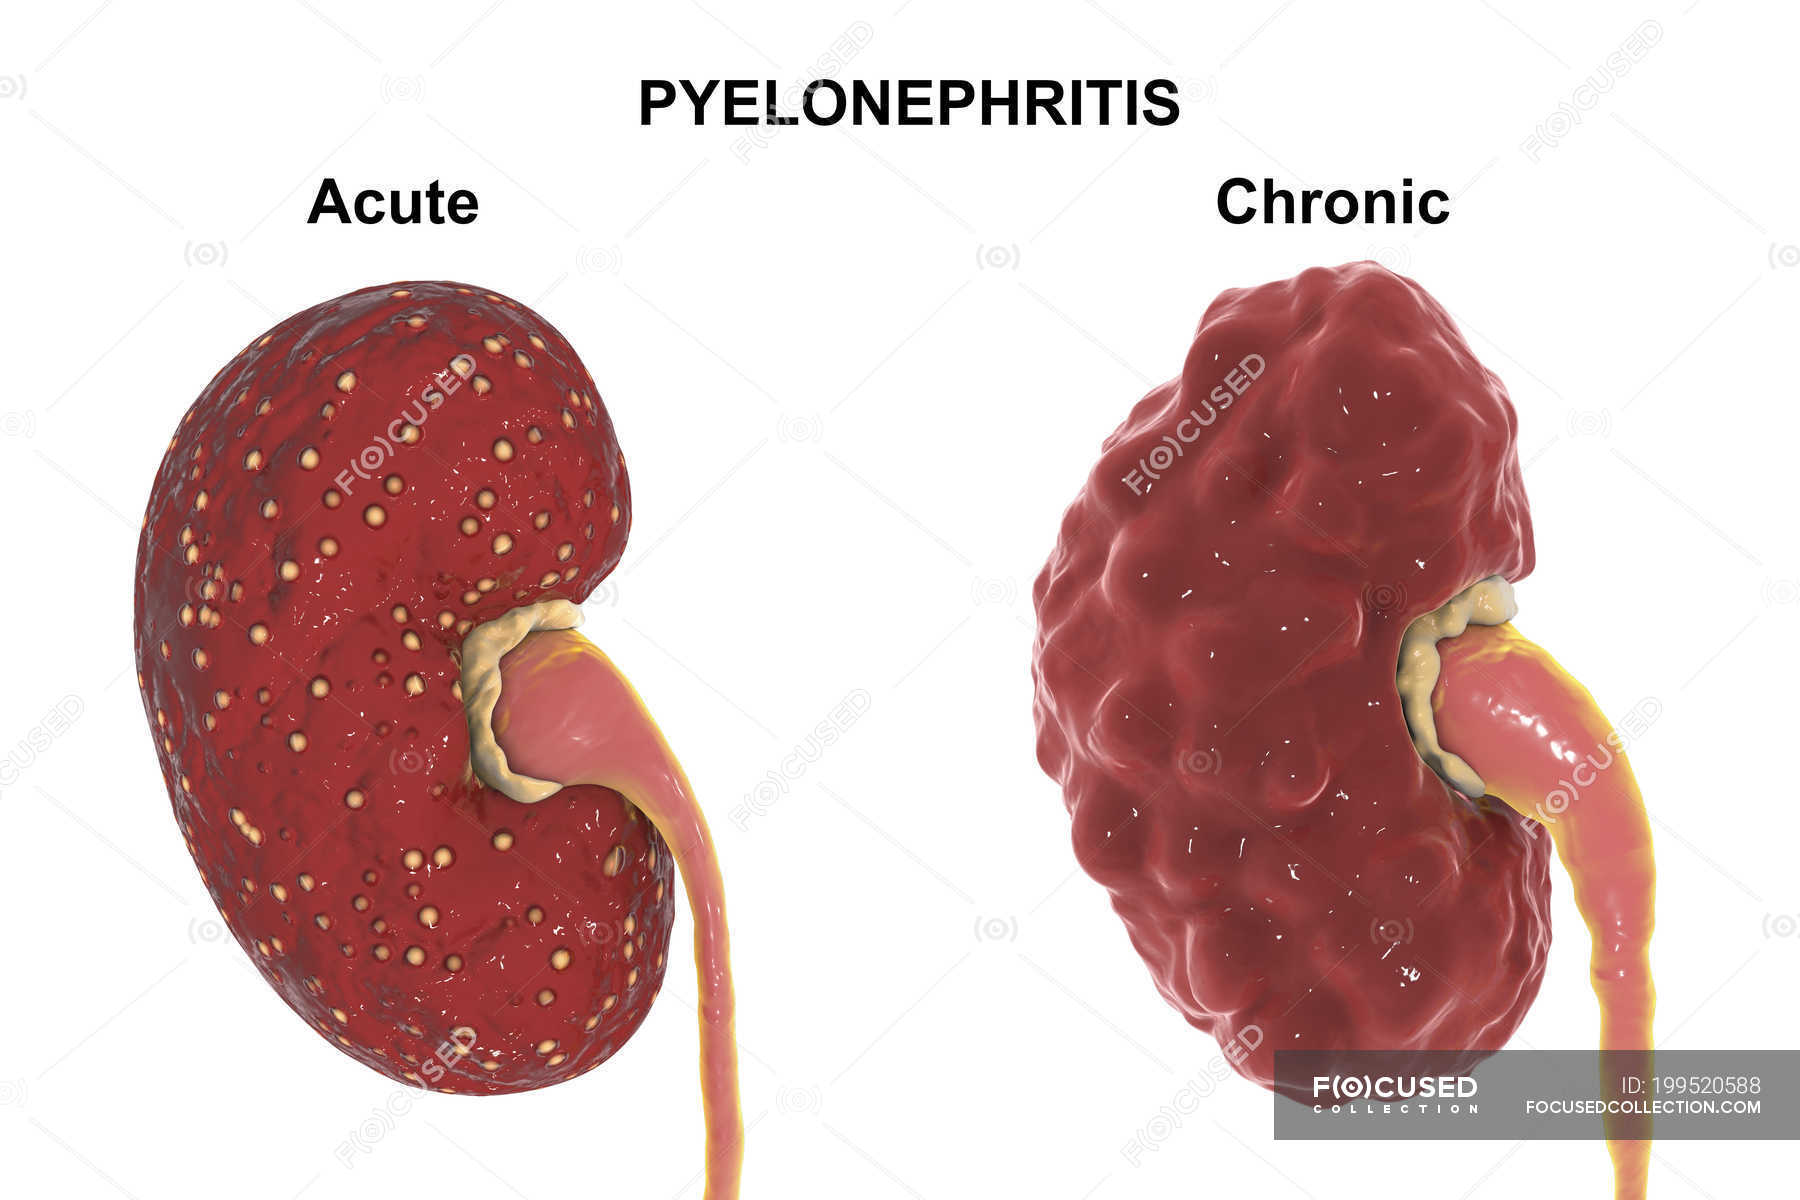 Comparison of gross anatomy of acute and chronic pyelonephritis